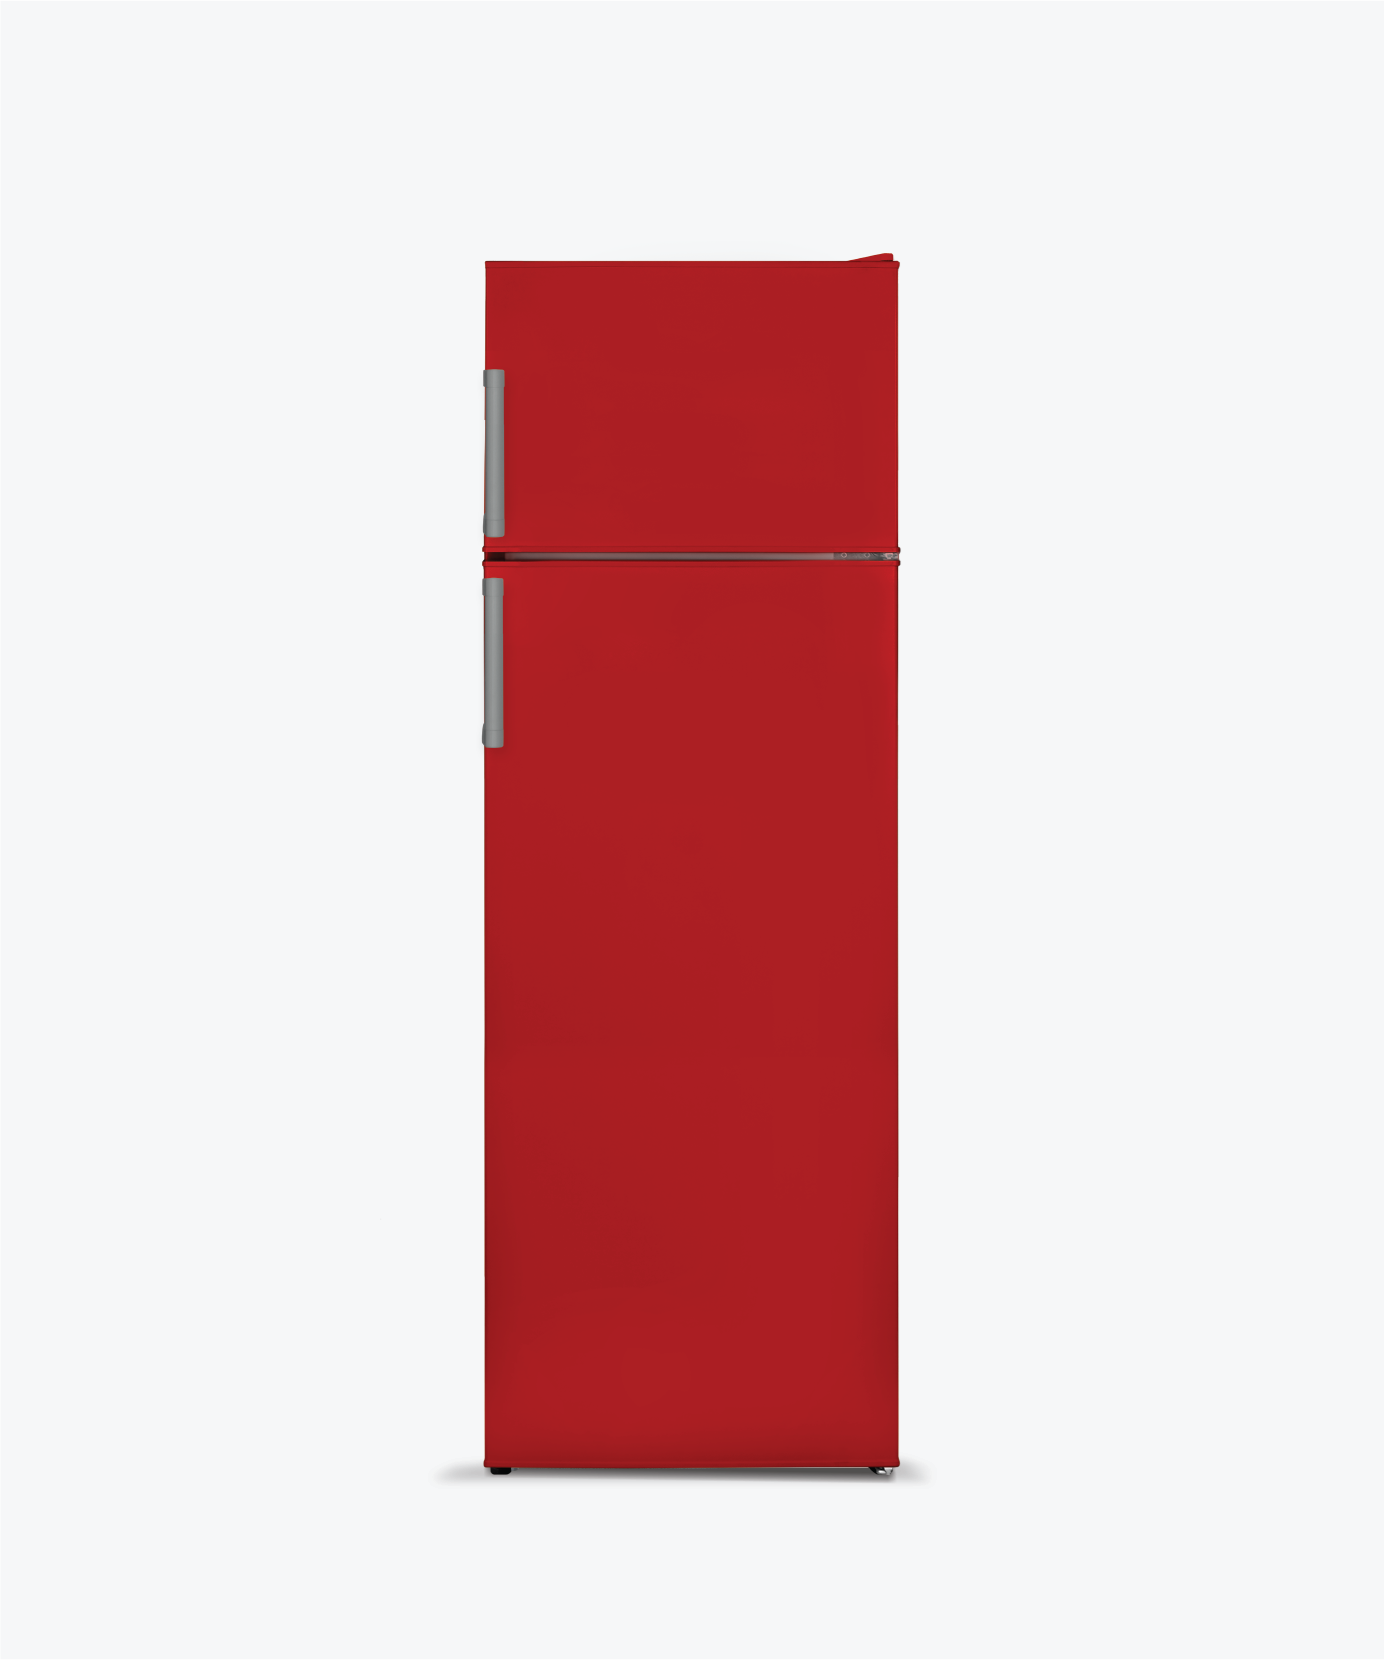 14 Feet  Red Refrigerator||Refrigerators 